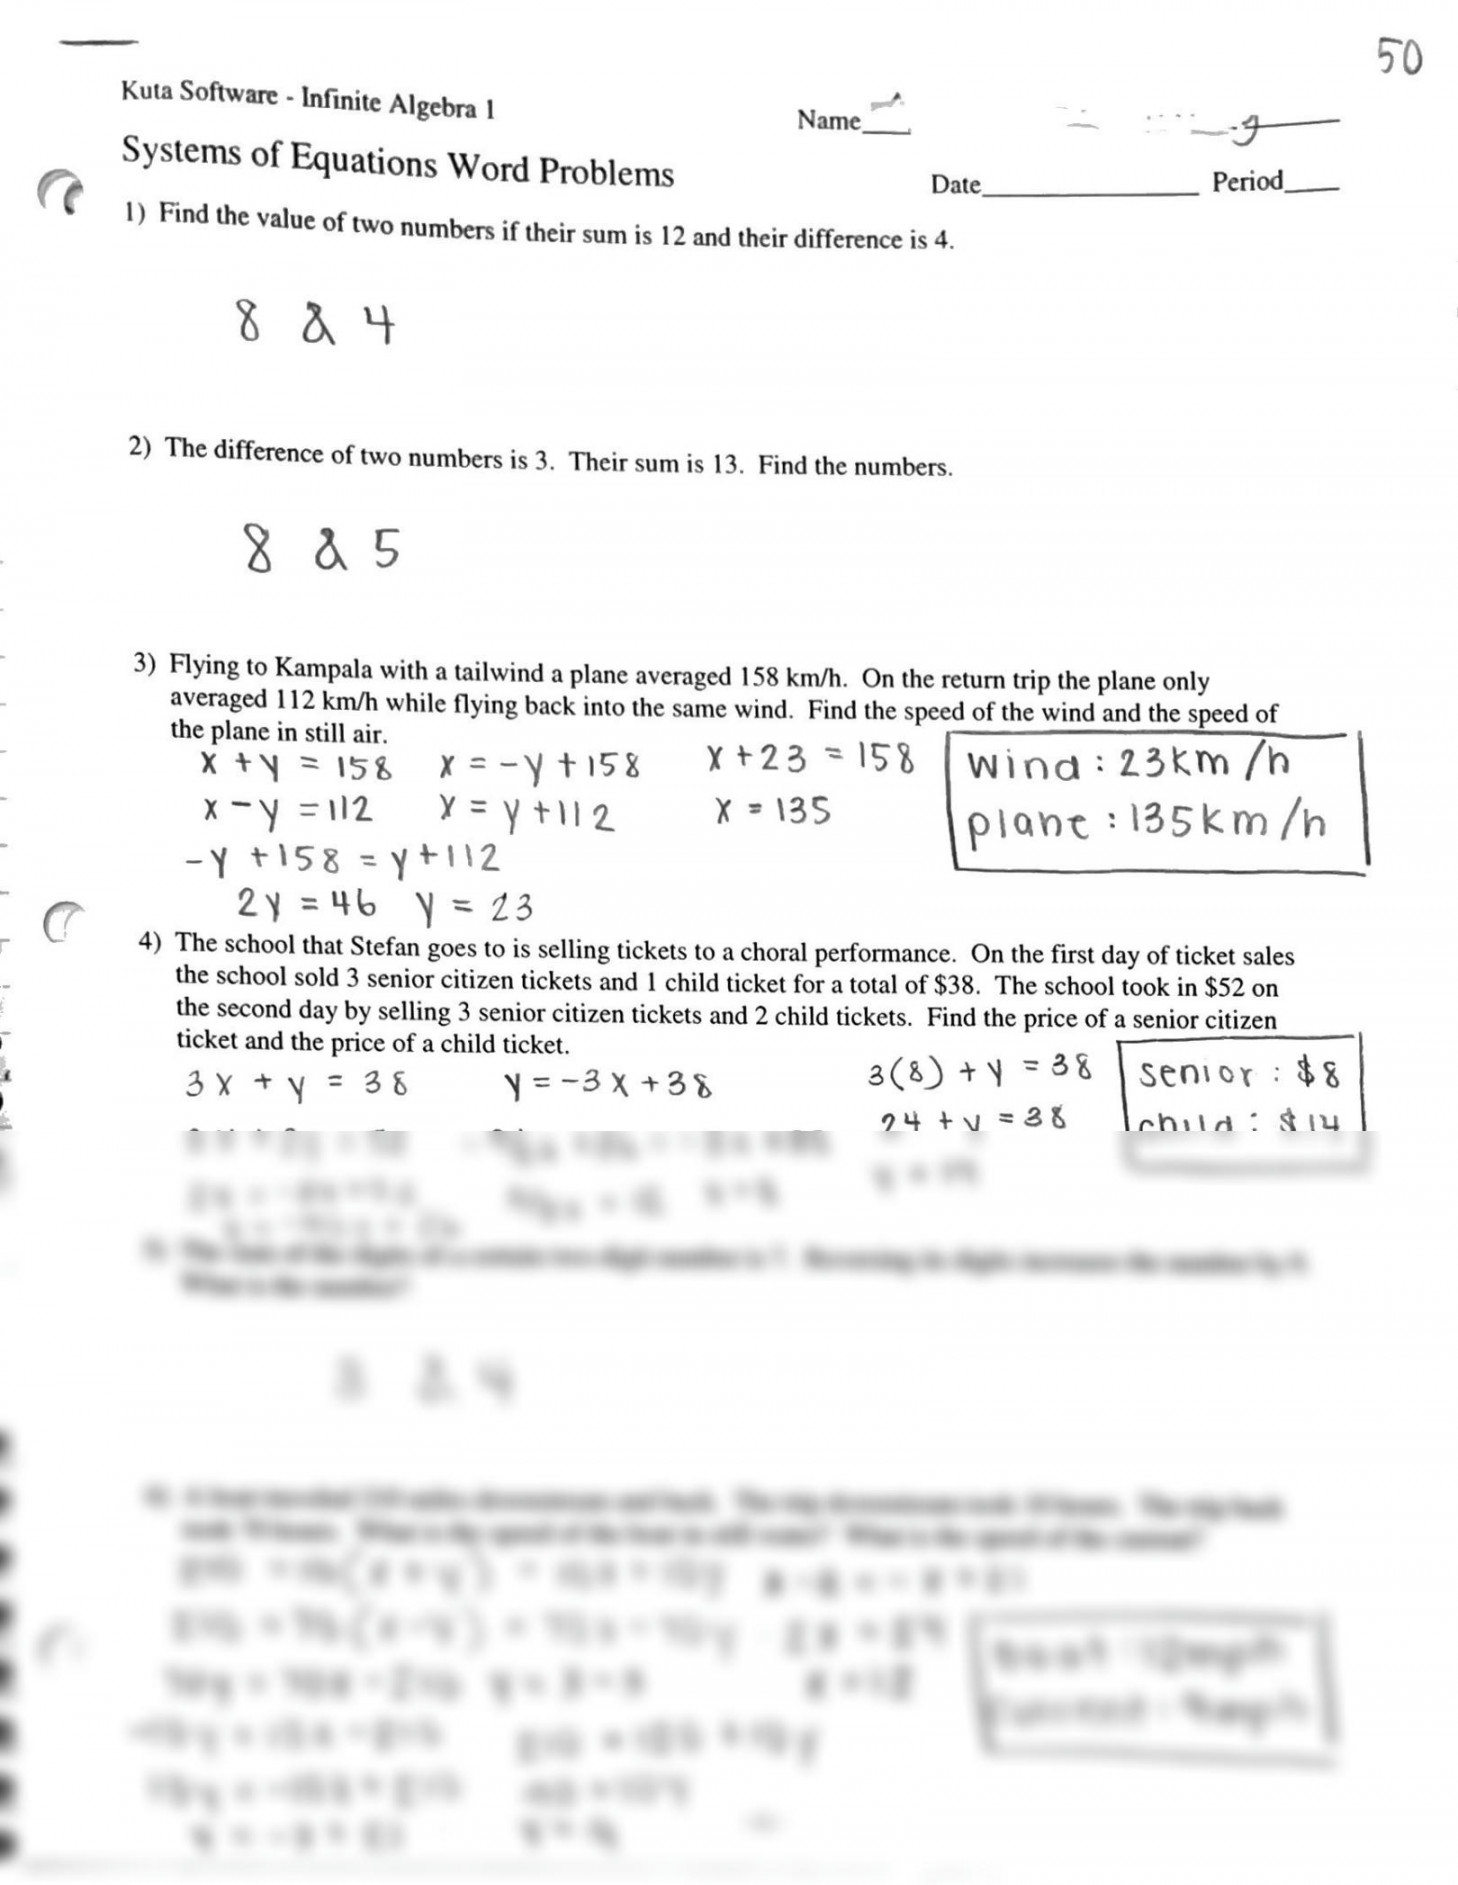 SOLUTION: Kuta Software Infinite Algebra : Systems of Equations